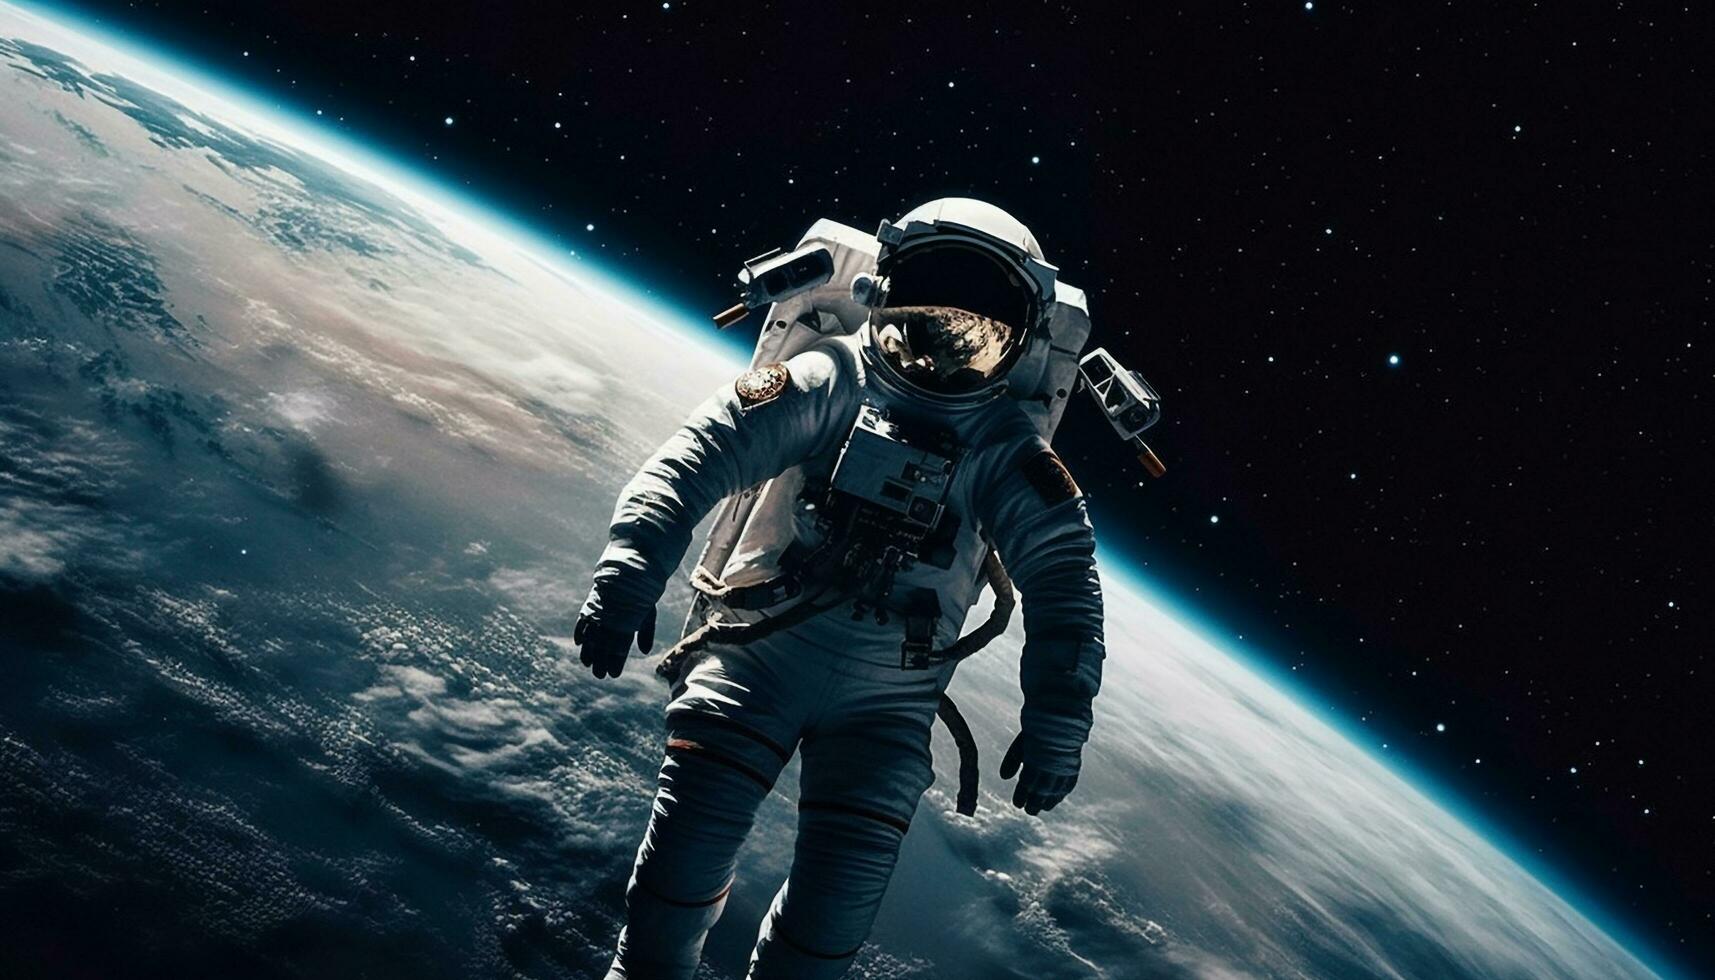 Astronauts orbiting nebula in futuristic space shuttle generated by AI photo